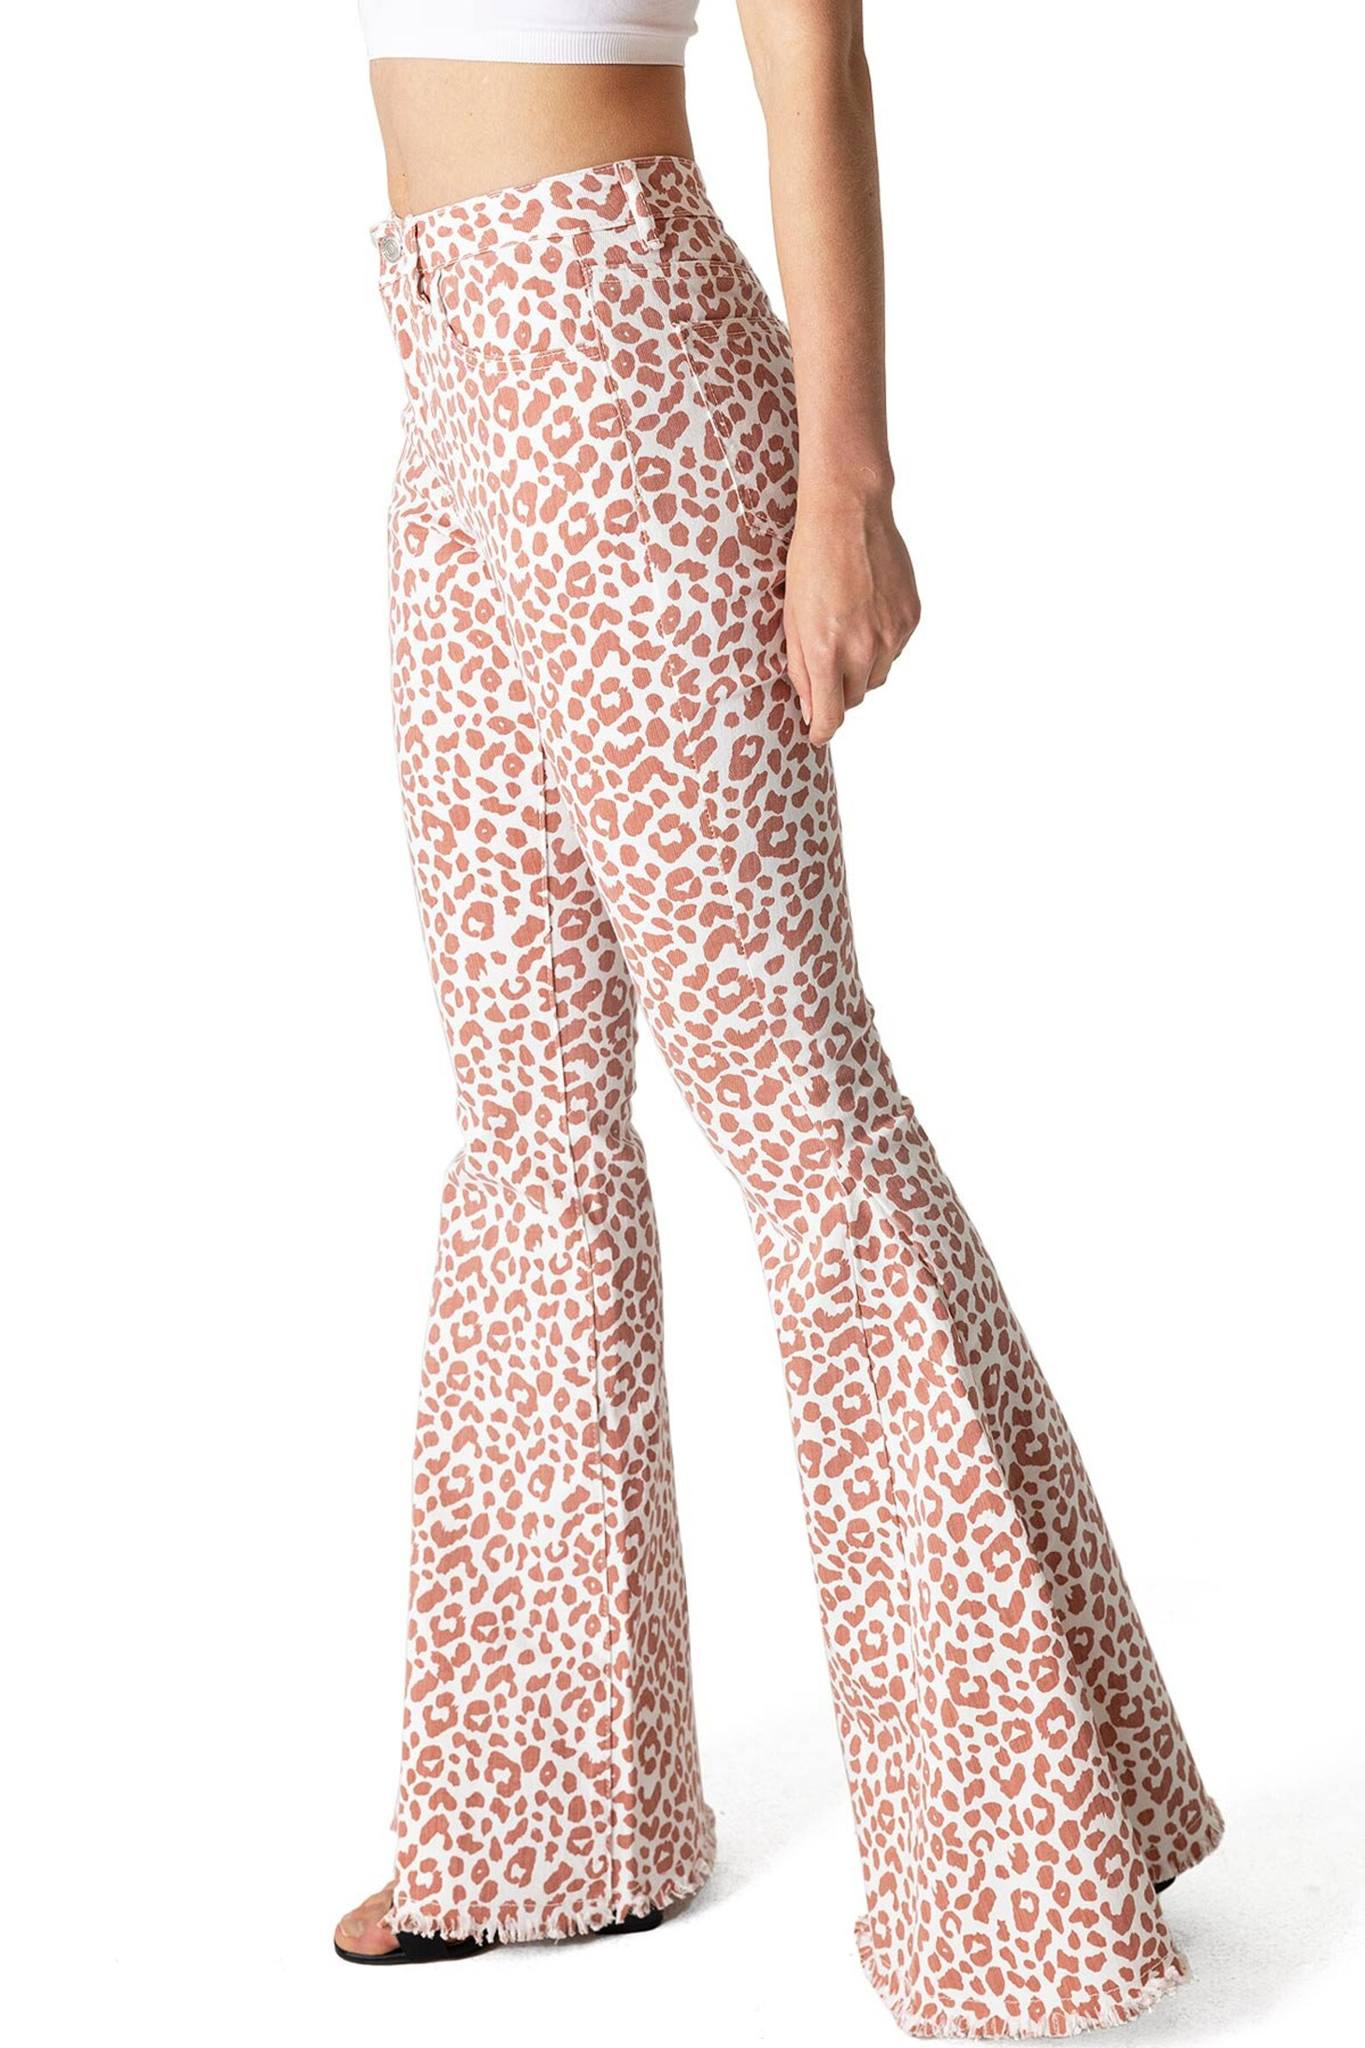 (Pre-order) P0459 Adult Leopard Denim Bell Bottom Jeans Woman Pants